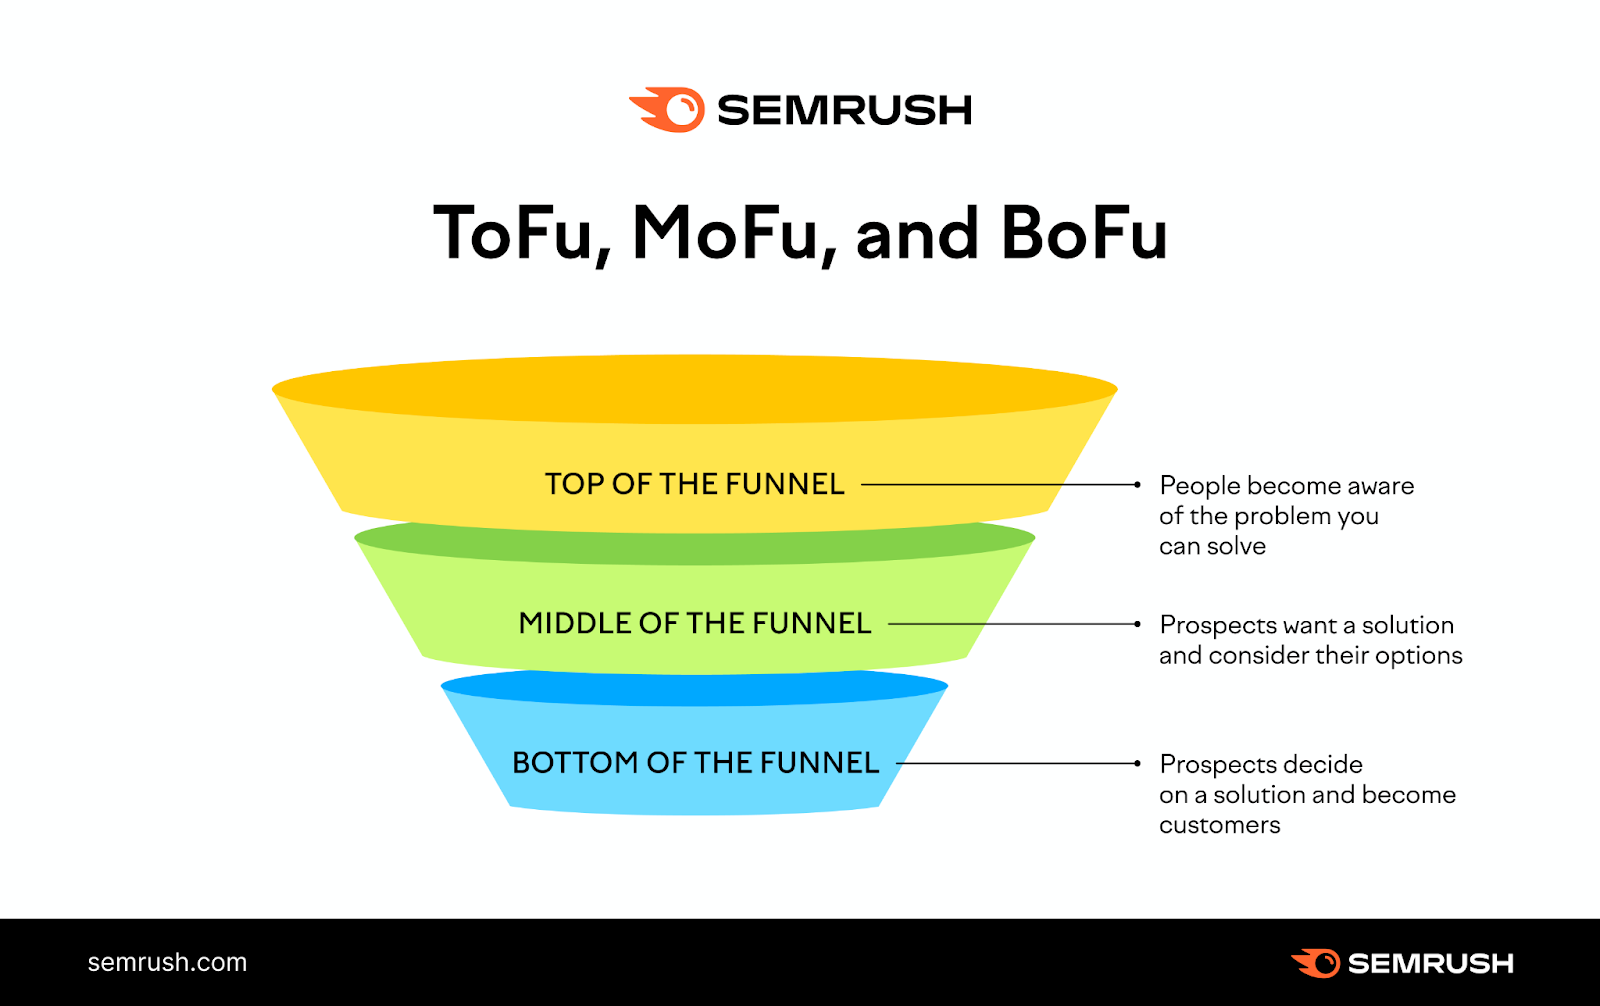 A visual representation of a content marketing funnel